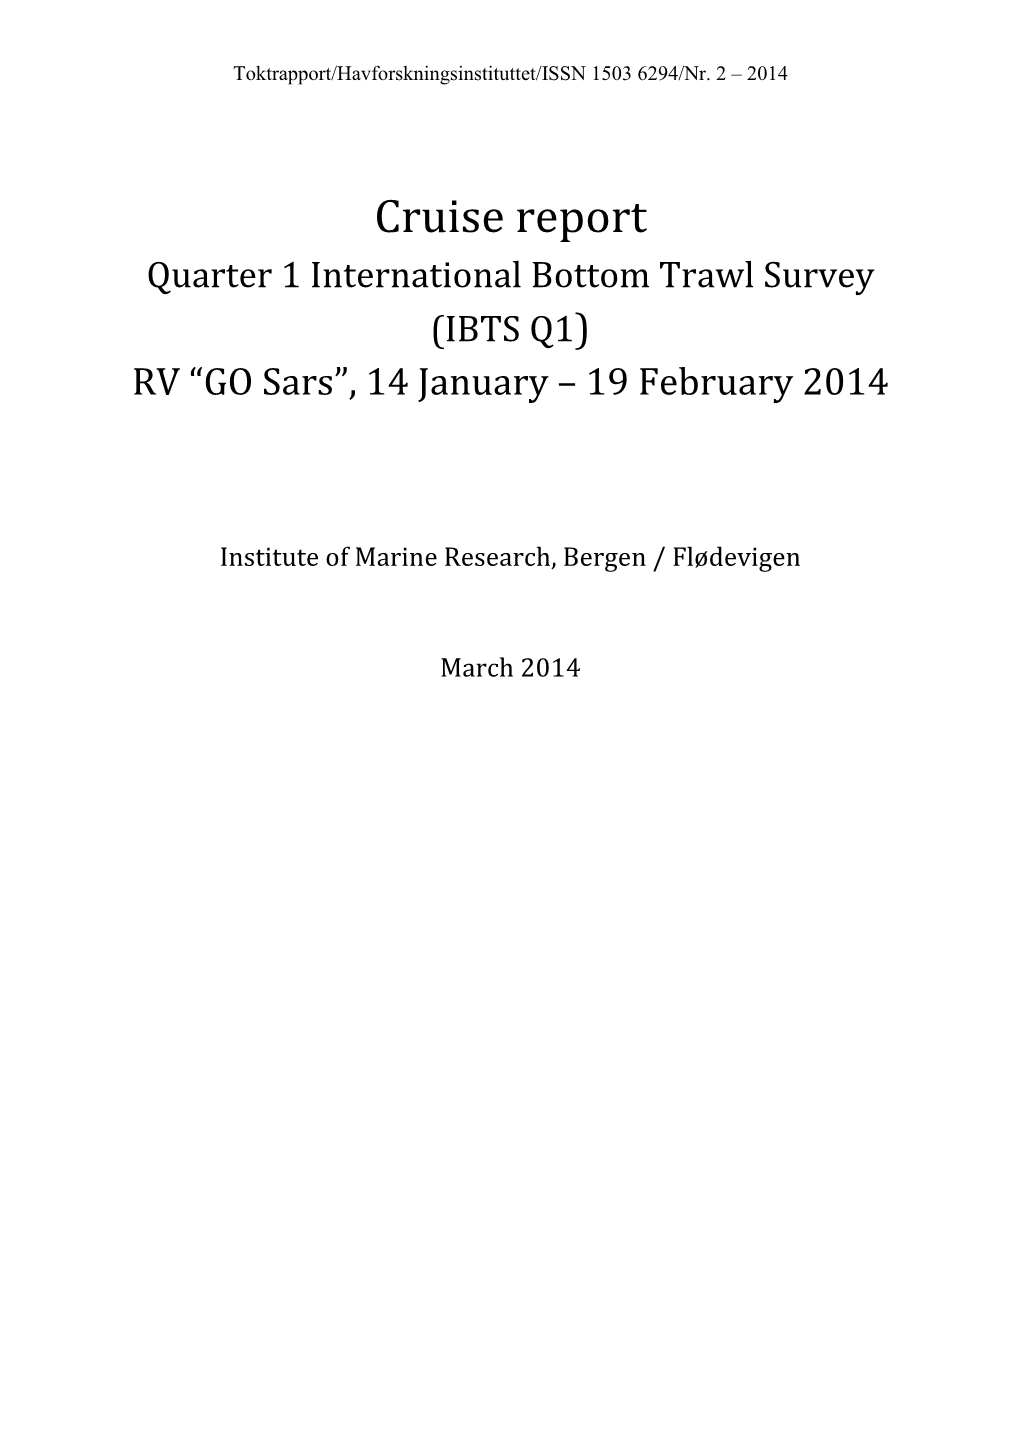 Cruise Report Quarter 1 International Bottom Trawl Survey (IBTS Q1) RV “GO Sars”, 14 January – 19 February 2014